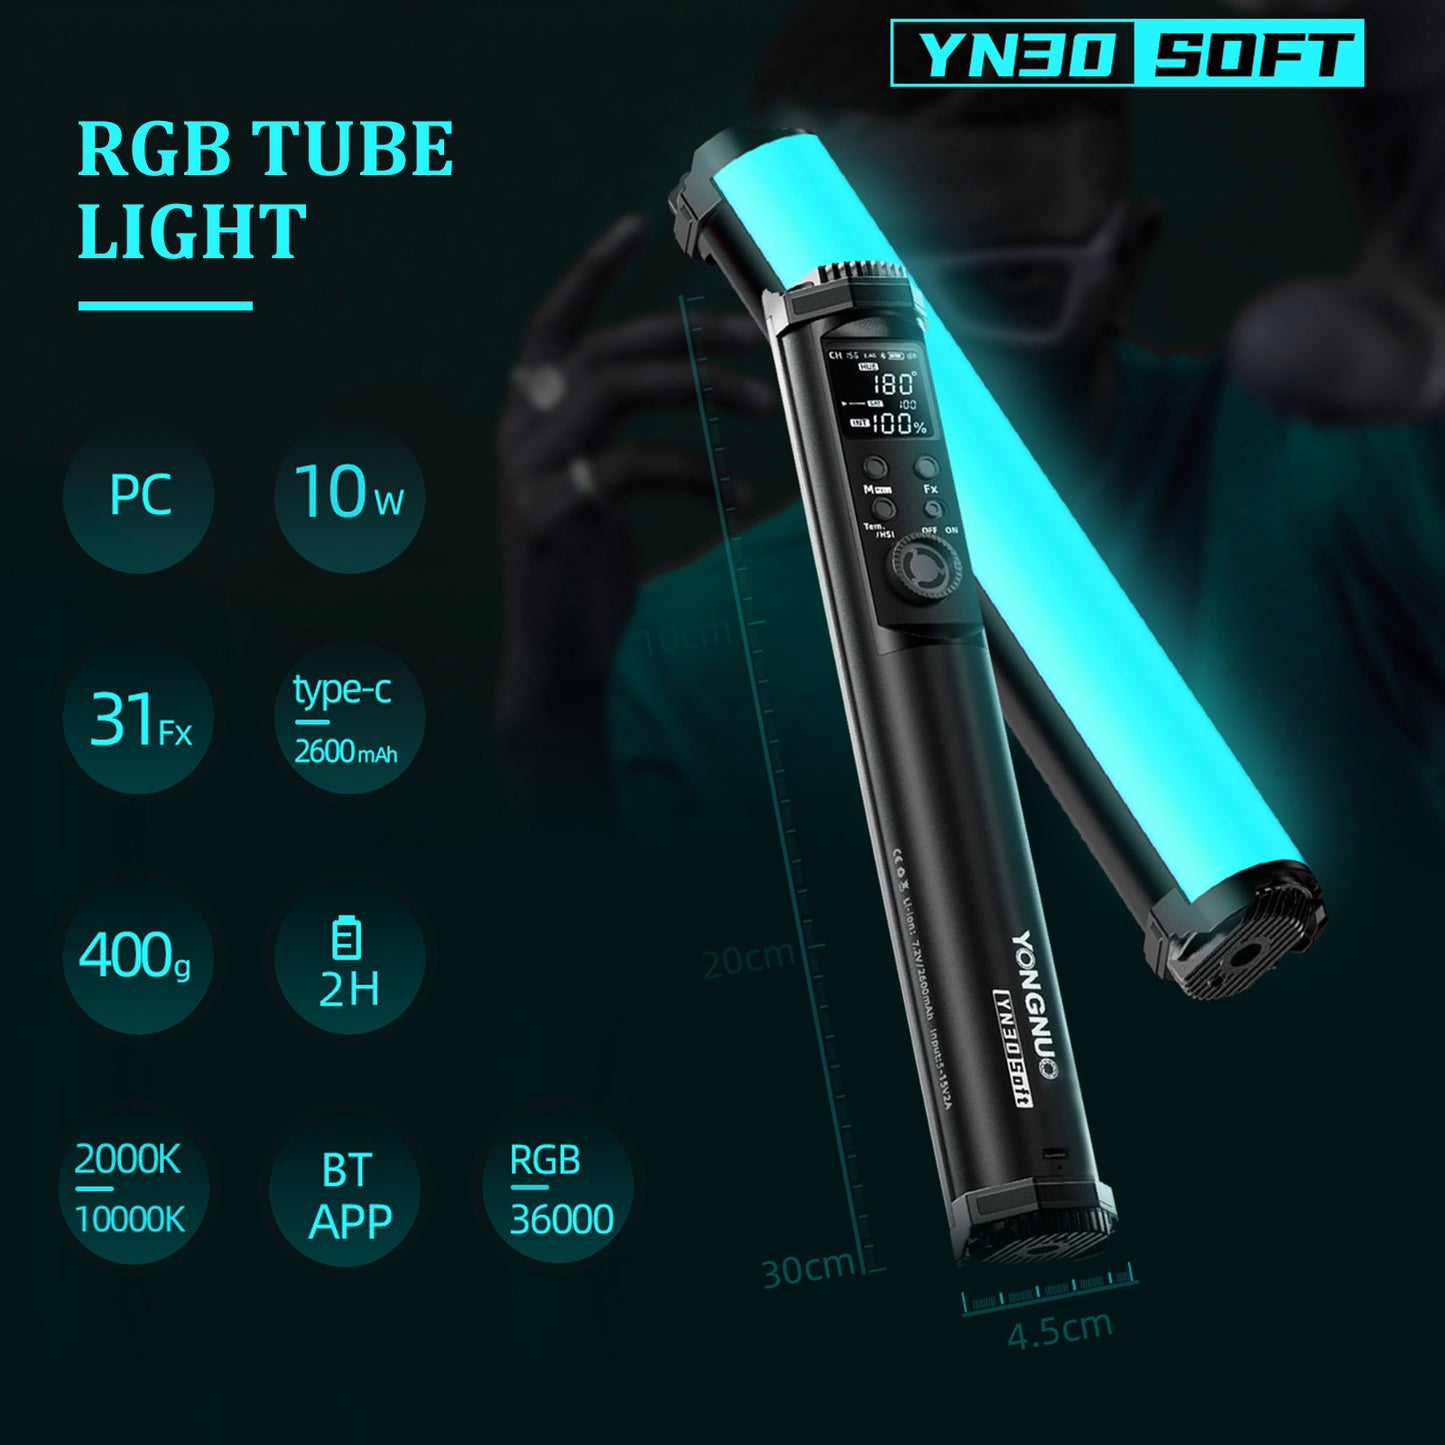 YONGNUO YN30 SOFT Magnetic RGB Tube Light Handheld Fill Light